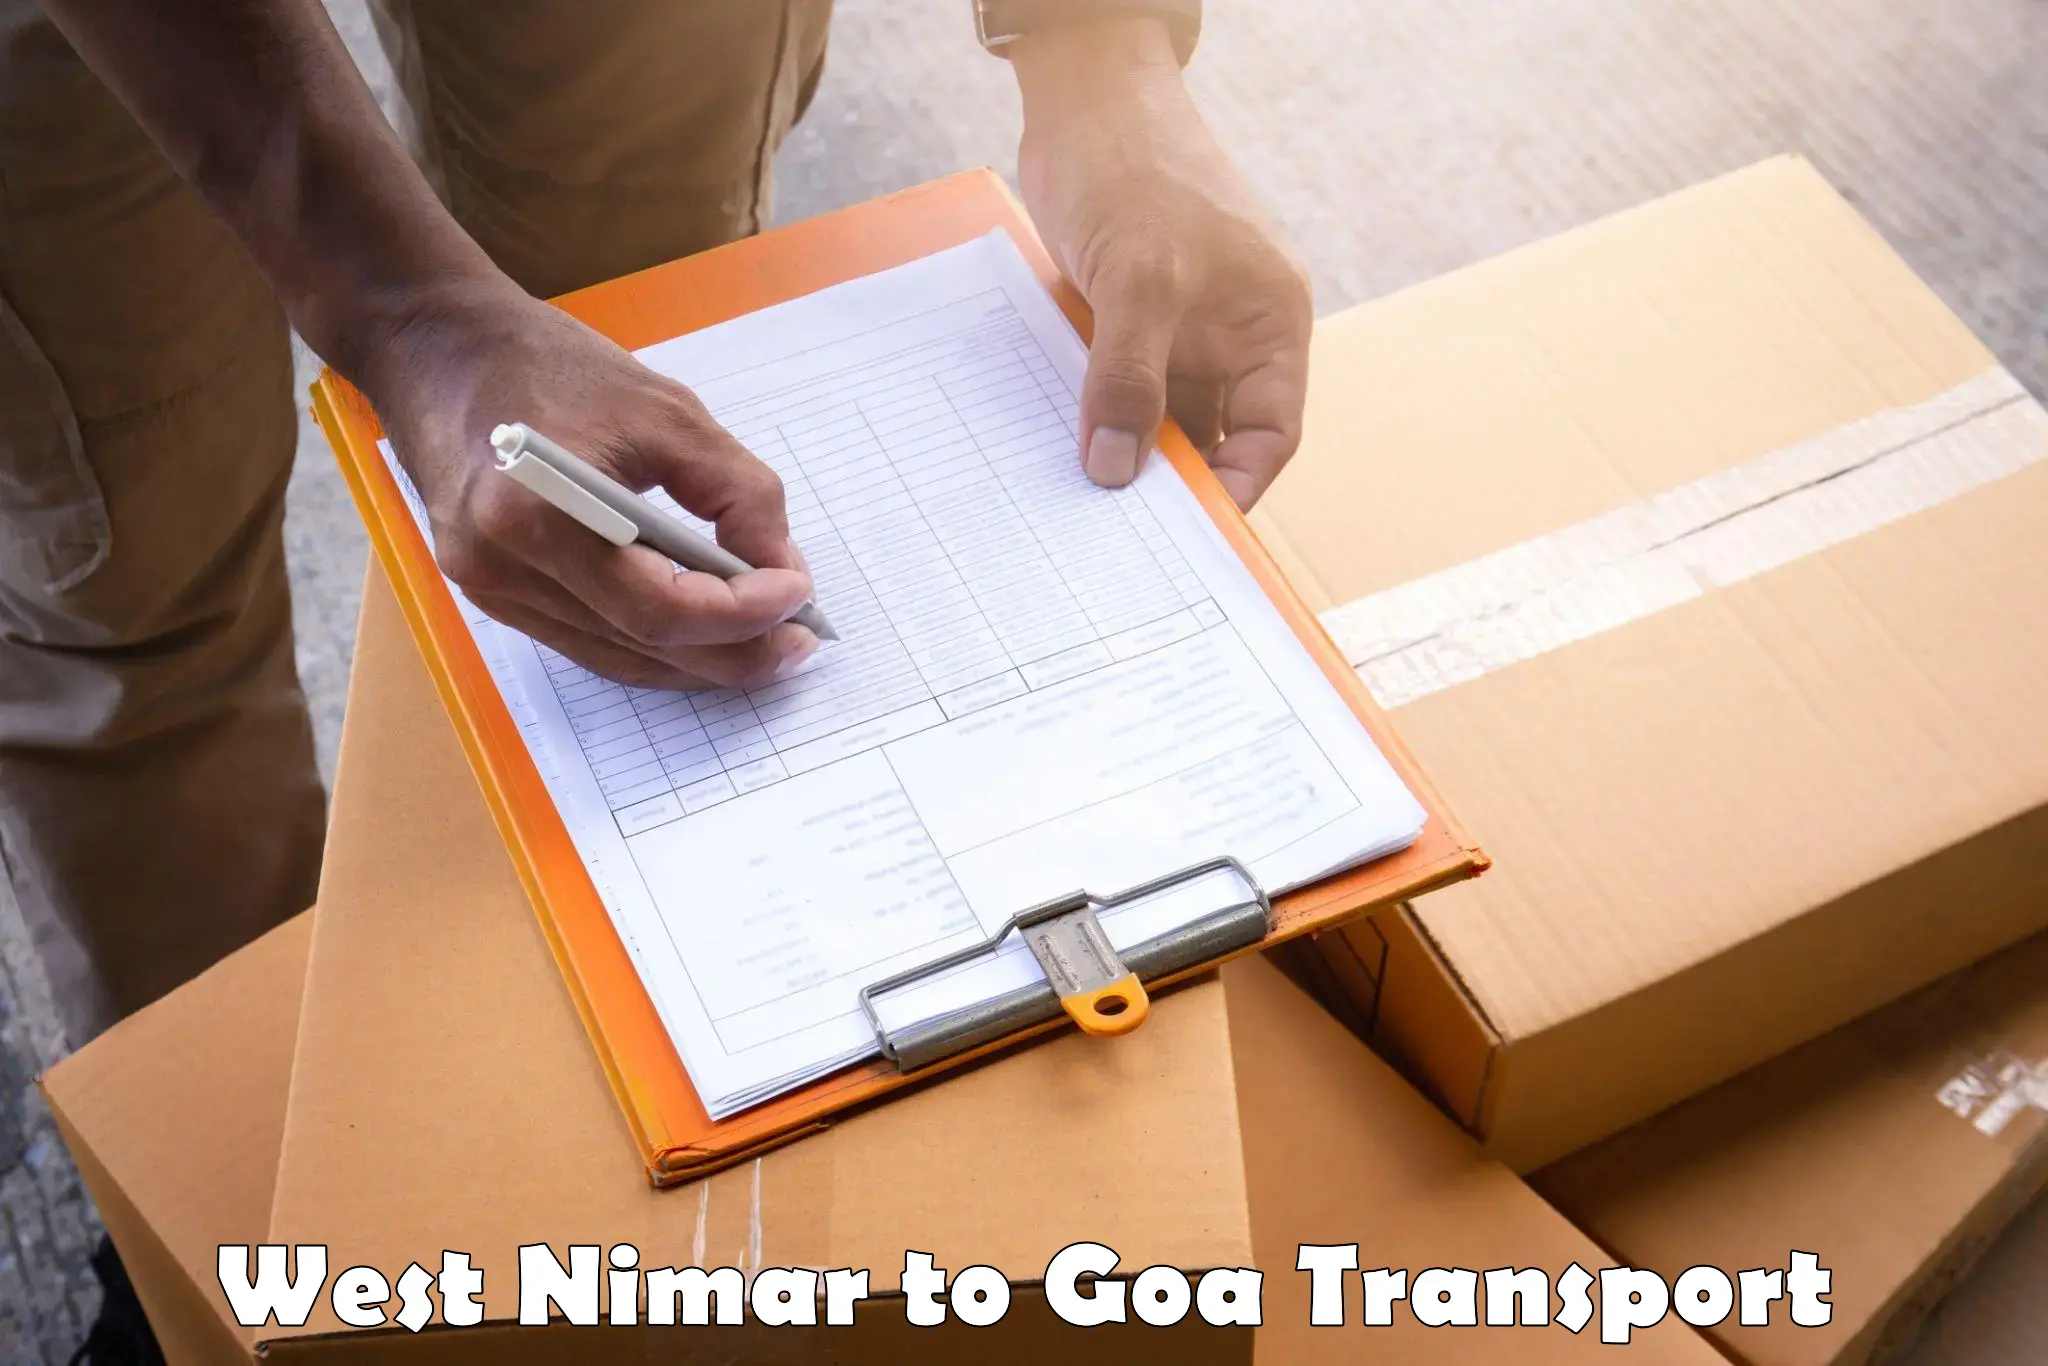 Online transport service West Nimar to Goa